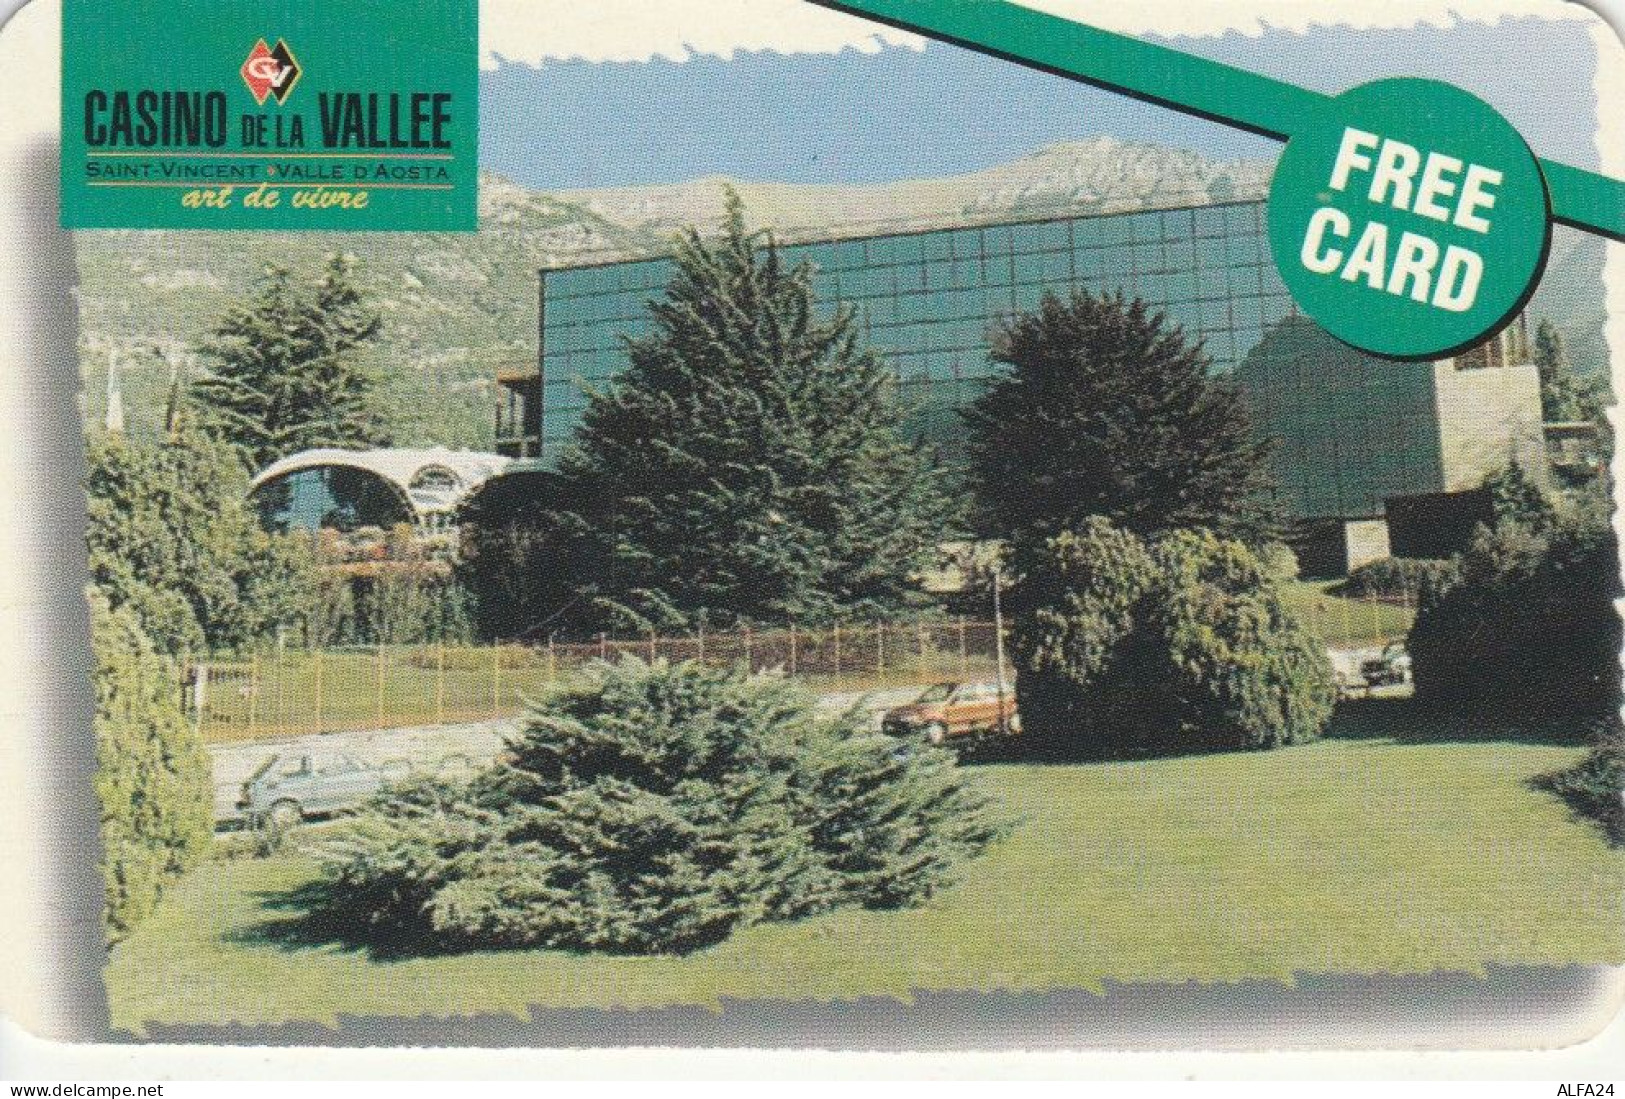 CARD INGRESSO CASINO DE LA VALLEE (CK3779 - Casino Cards